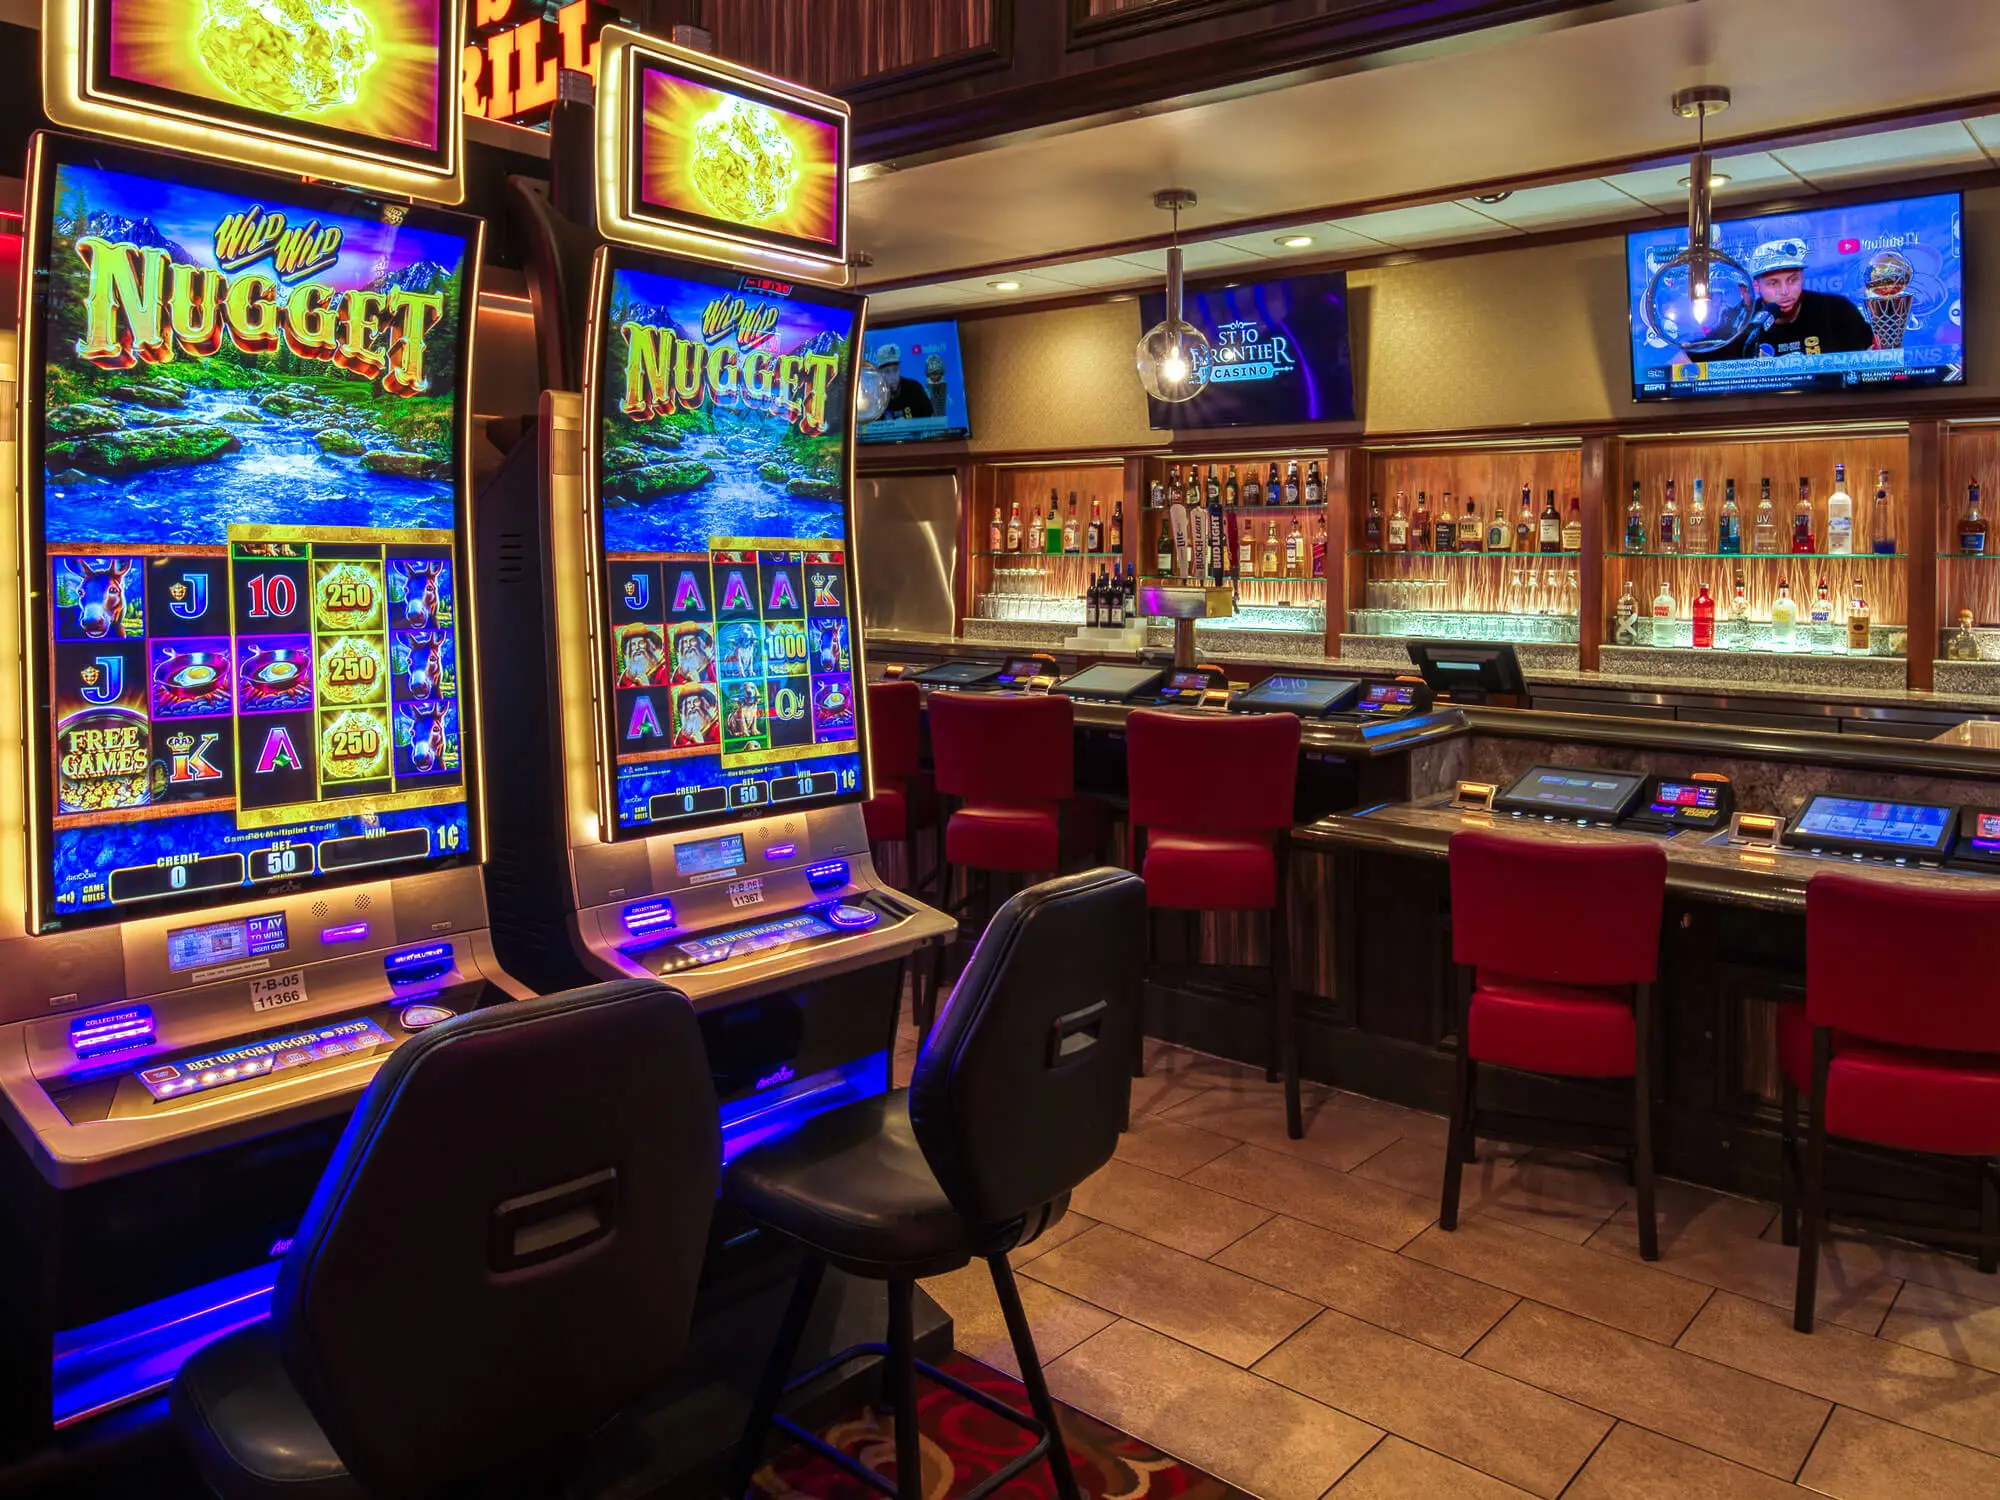 Casino Slot bar counter view